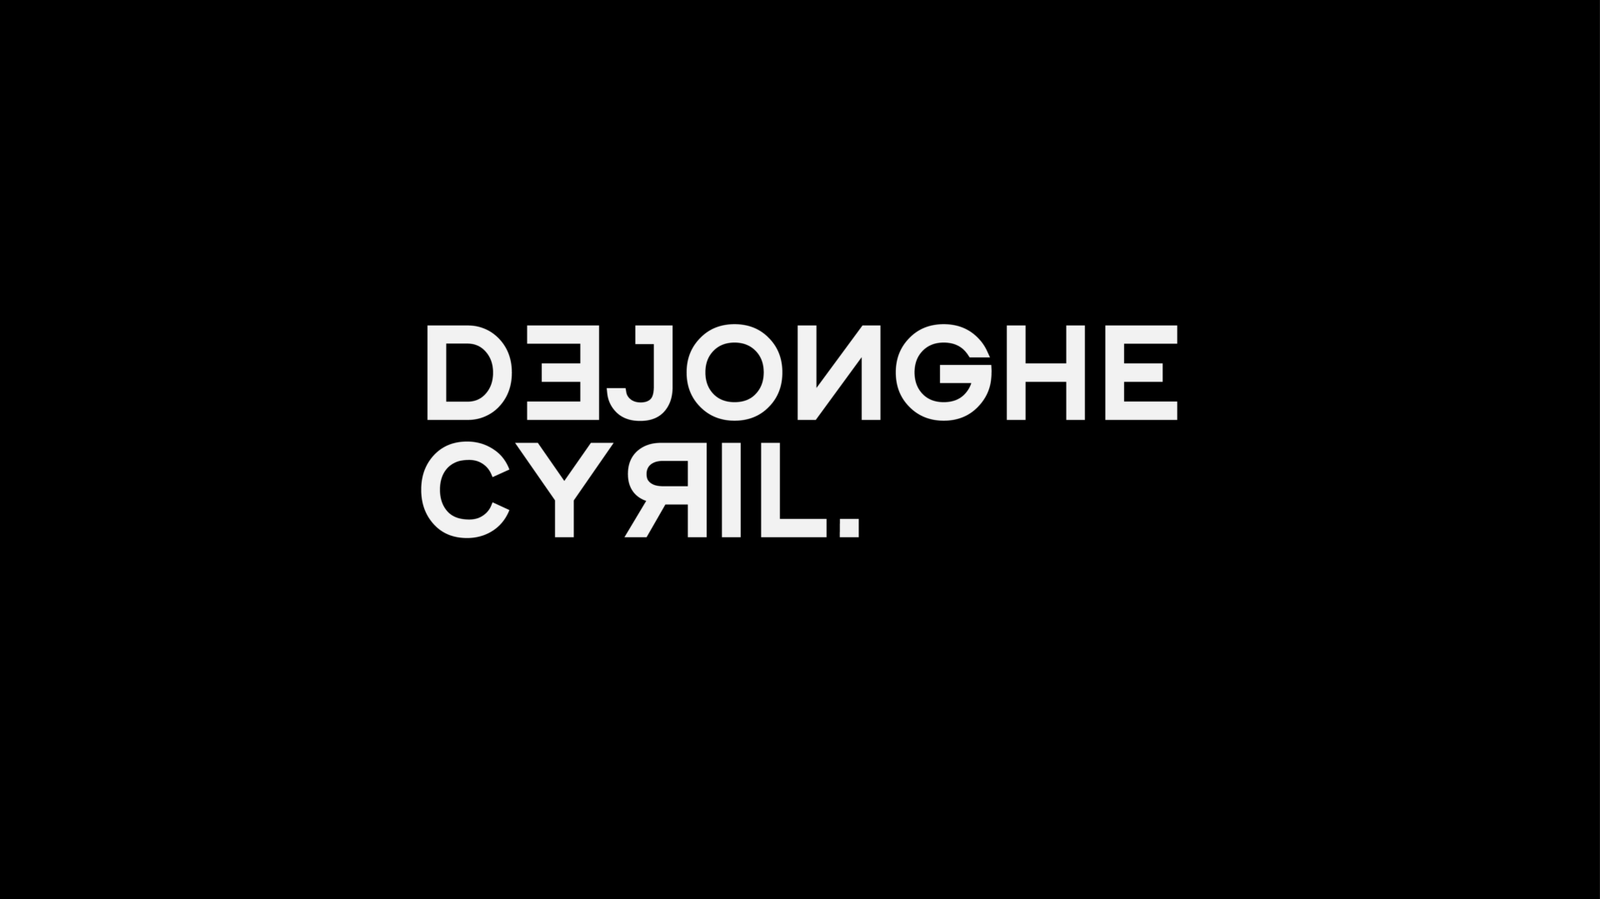 Cyril Dejonghe